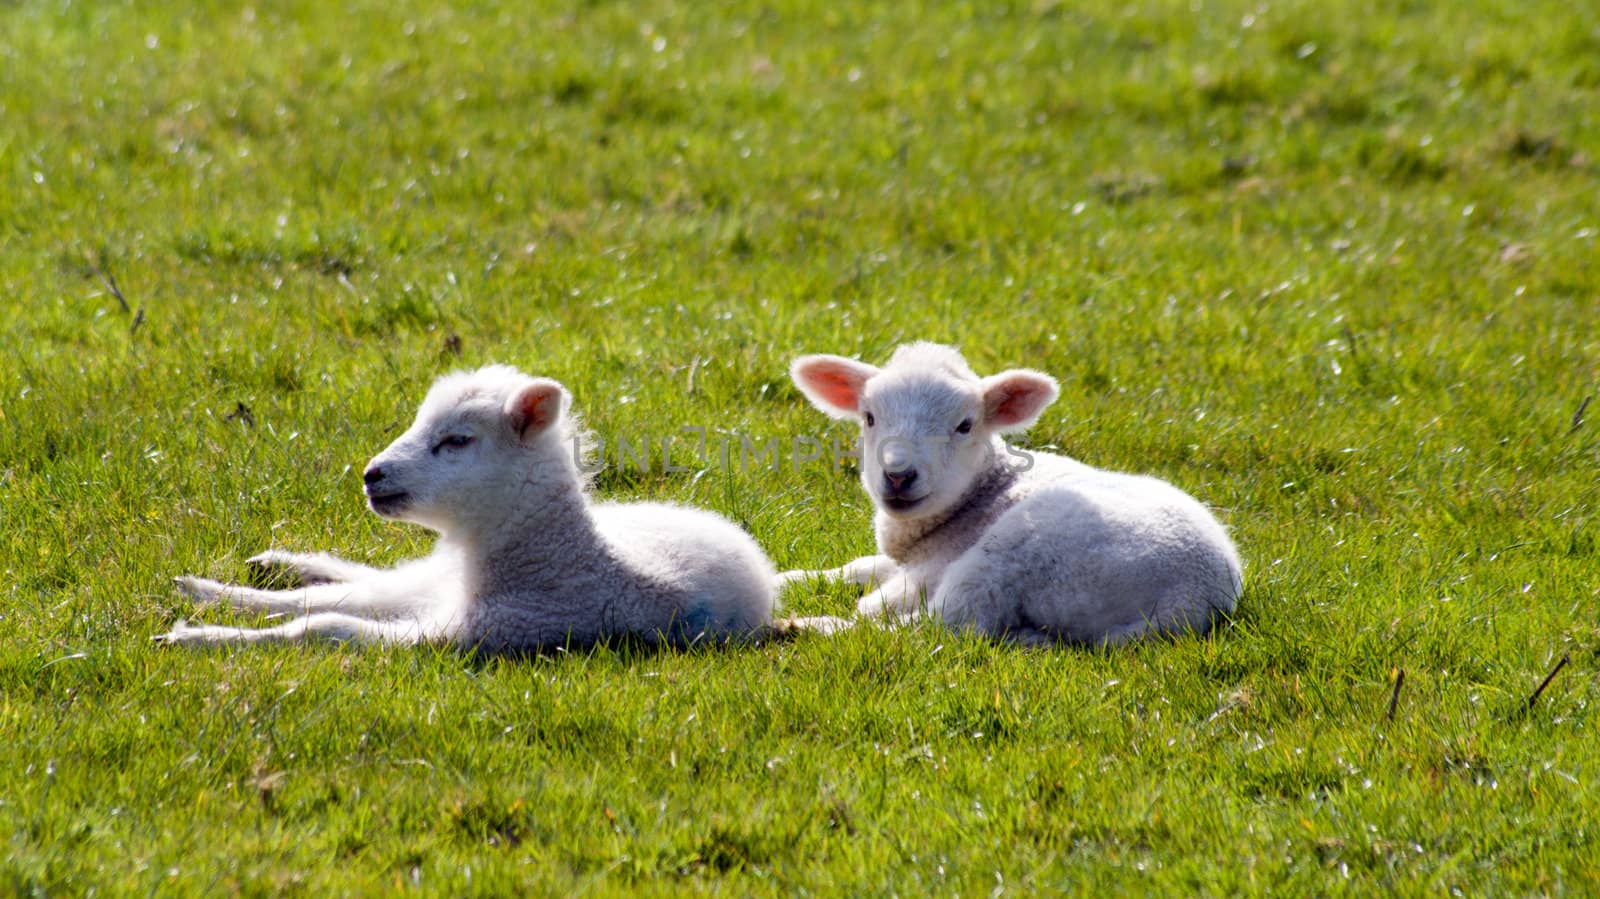 Young Lamb On Green Grass,Cornwall, UK